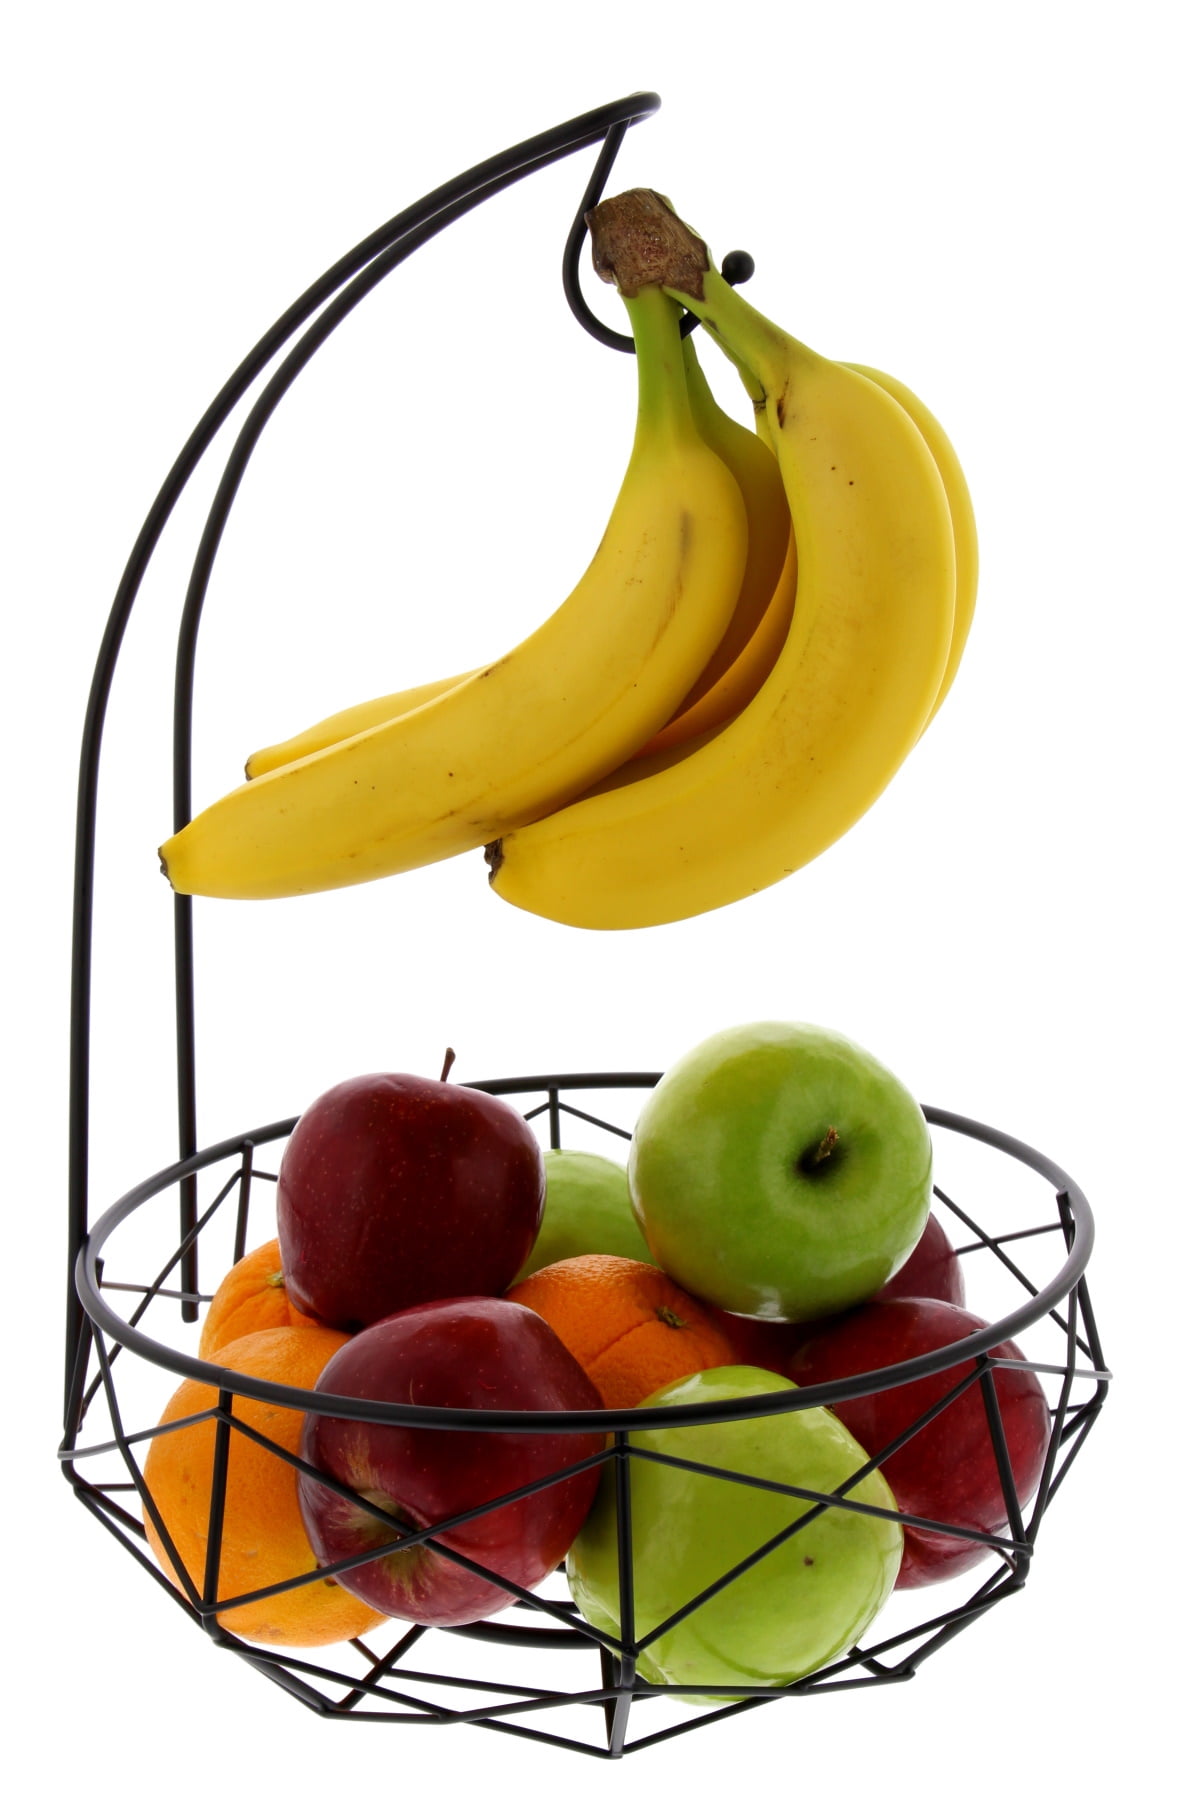 Chrome Wire Fruit Bowl With Banana Tree Hanger Hook Holder Storage Rack Basket